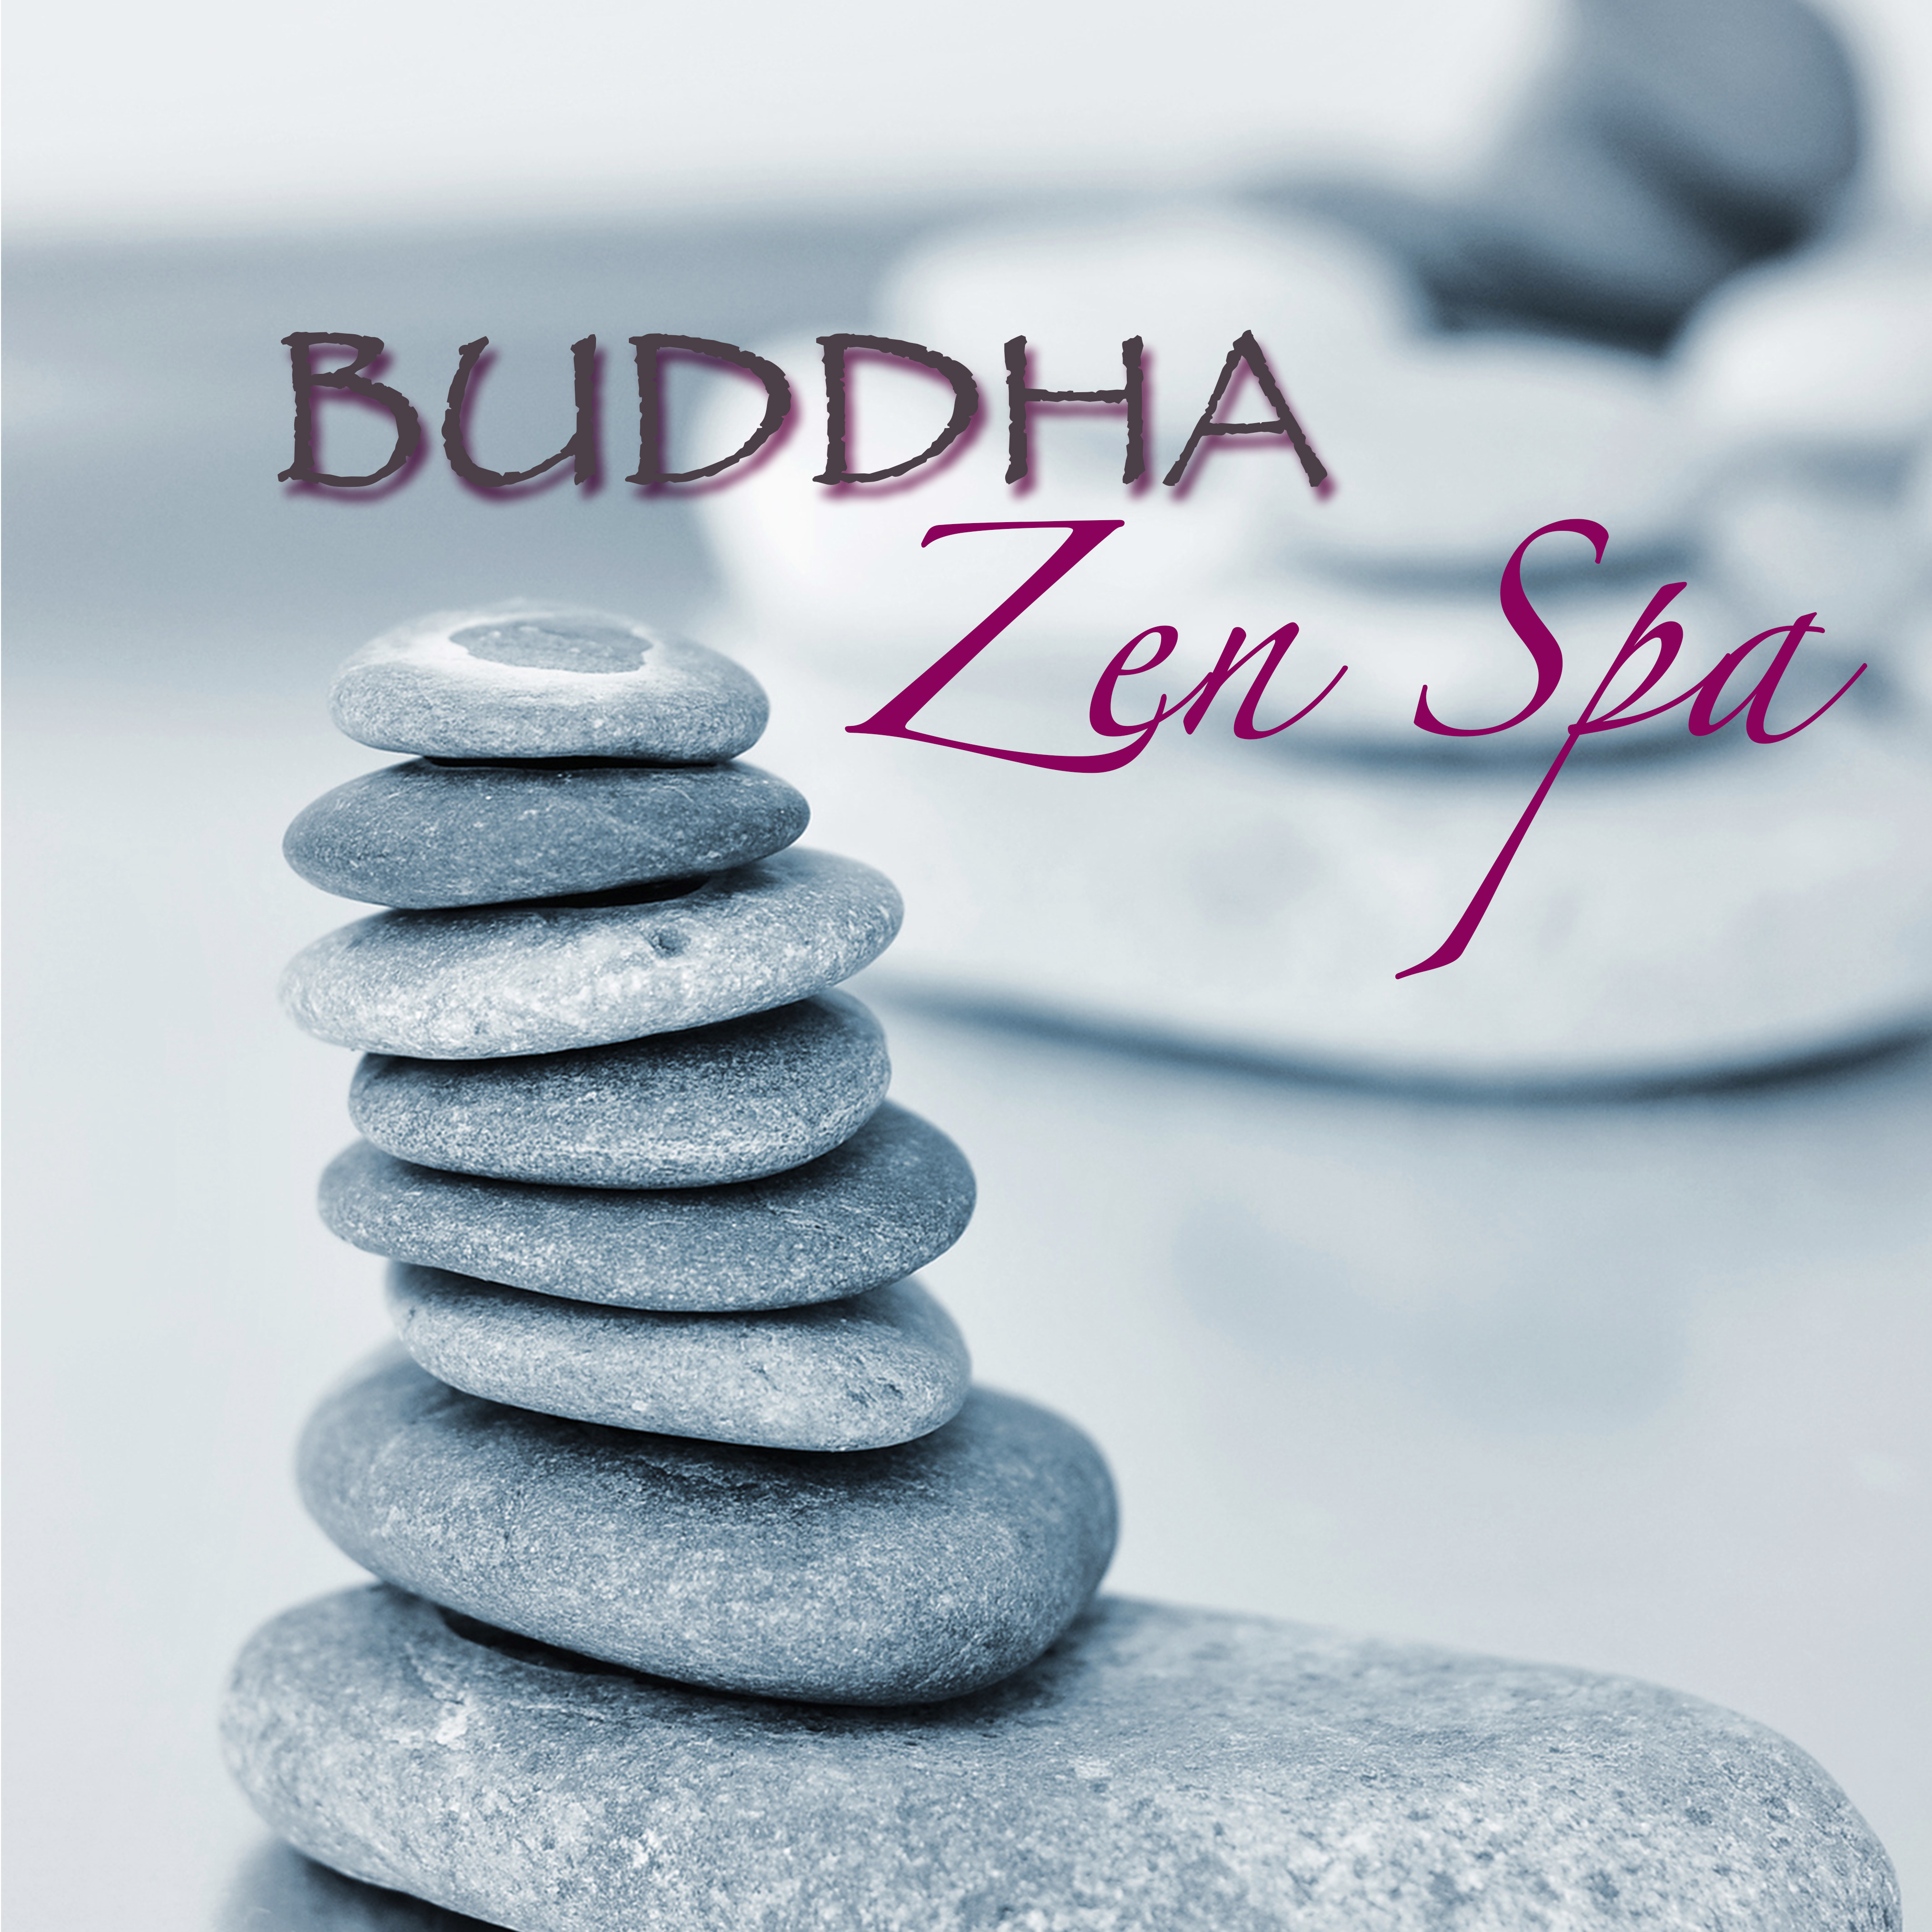 Buddha Zen Spa  Chillout Soft Music for Zen Spa, Massage, Shiatsu, Wellness, Relax, Thai Spa, Hamman and Bath in Beauty Center  Thermal Spa